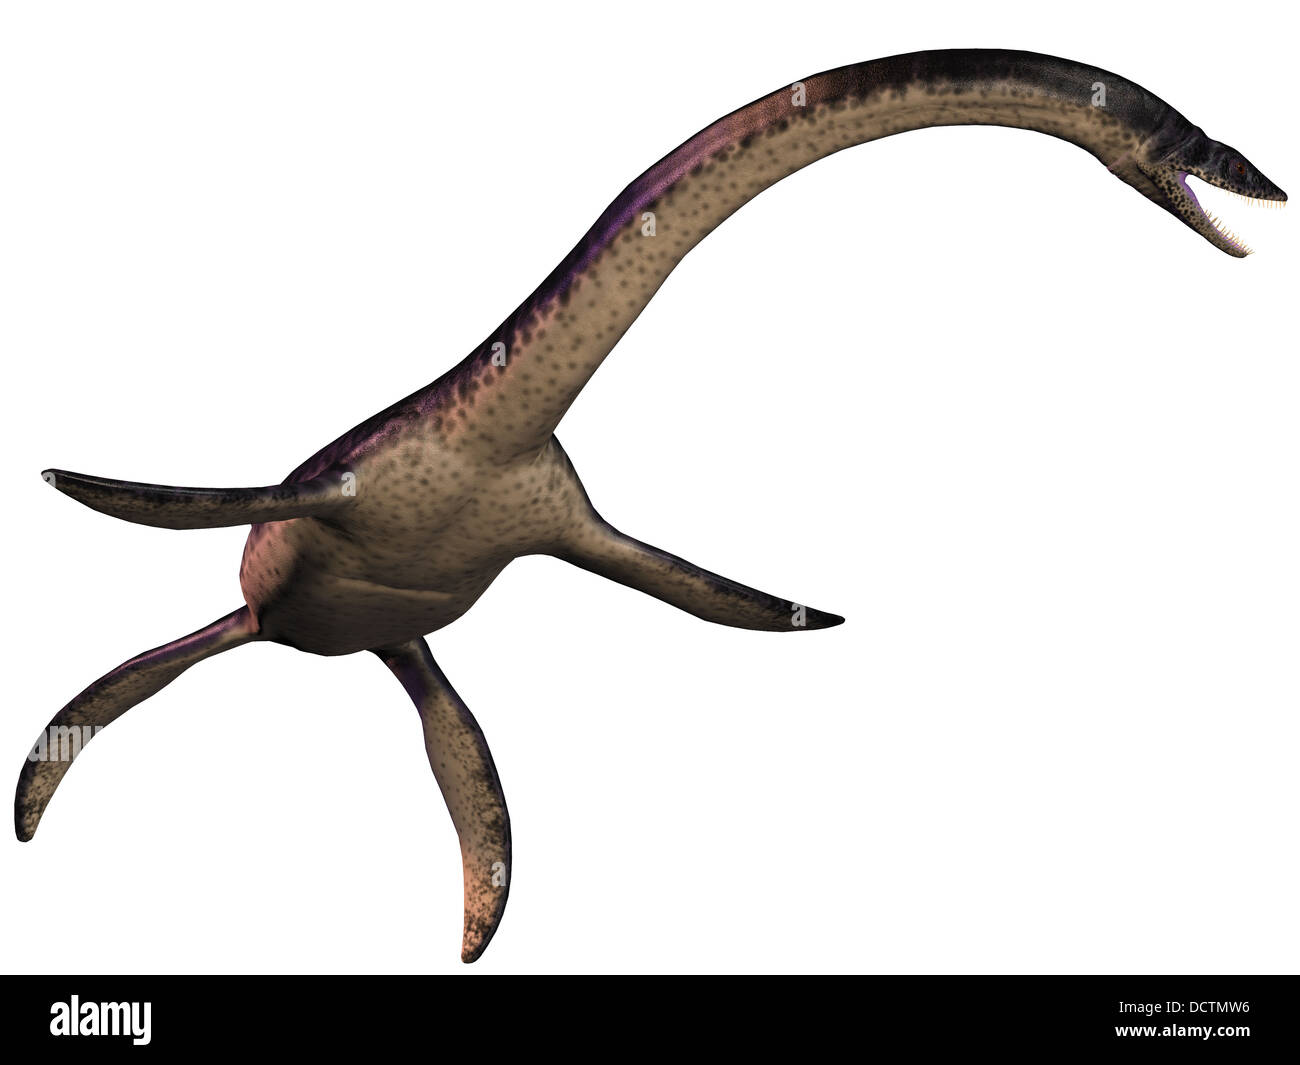 Plesiosaurus was a marine predatory reptile in the Jurassic Era. Stock Photo